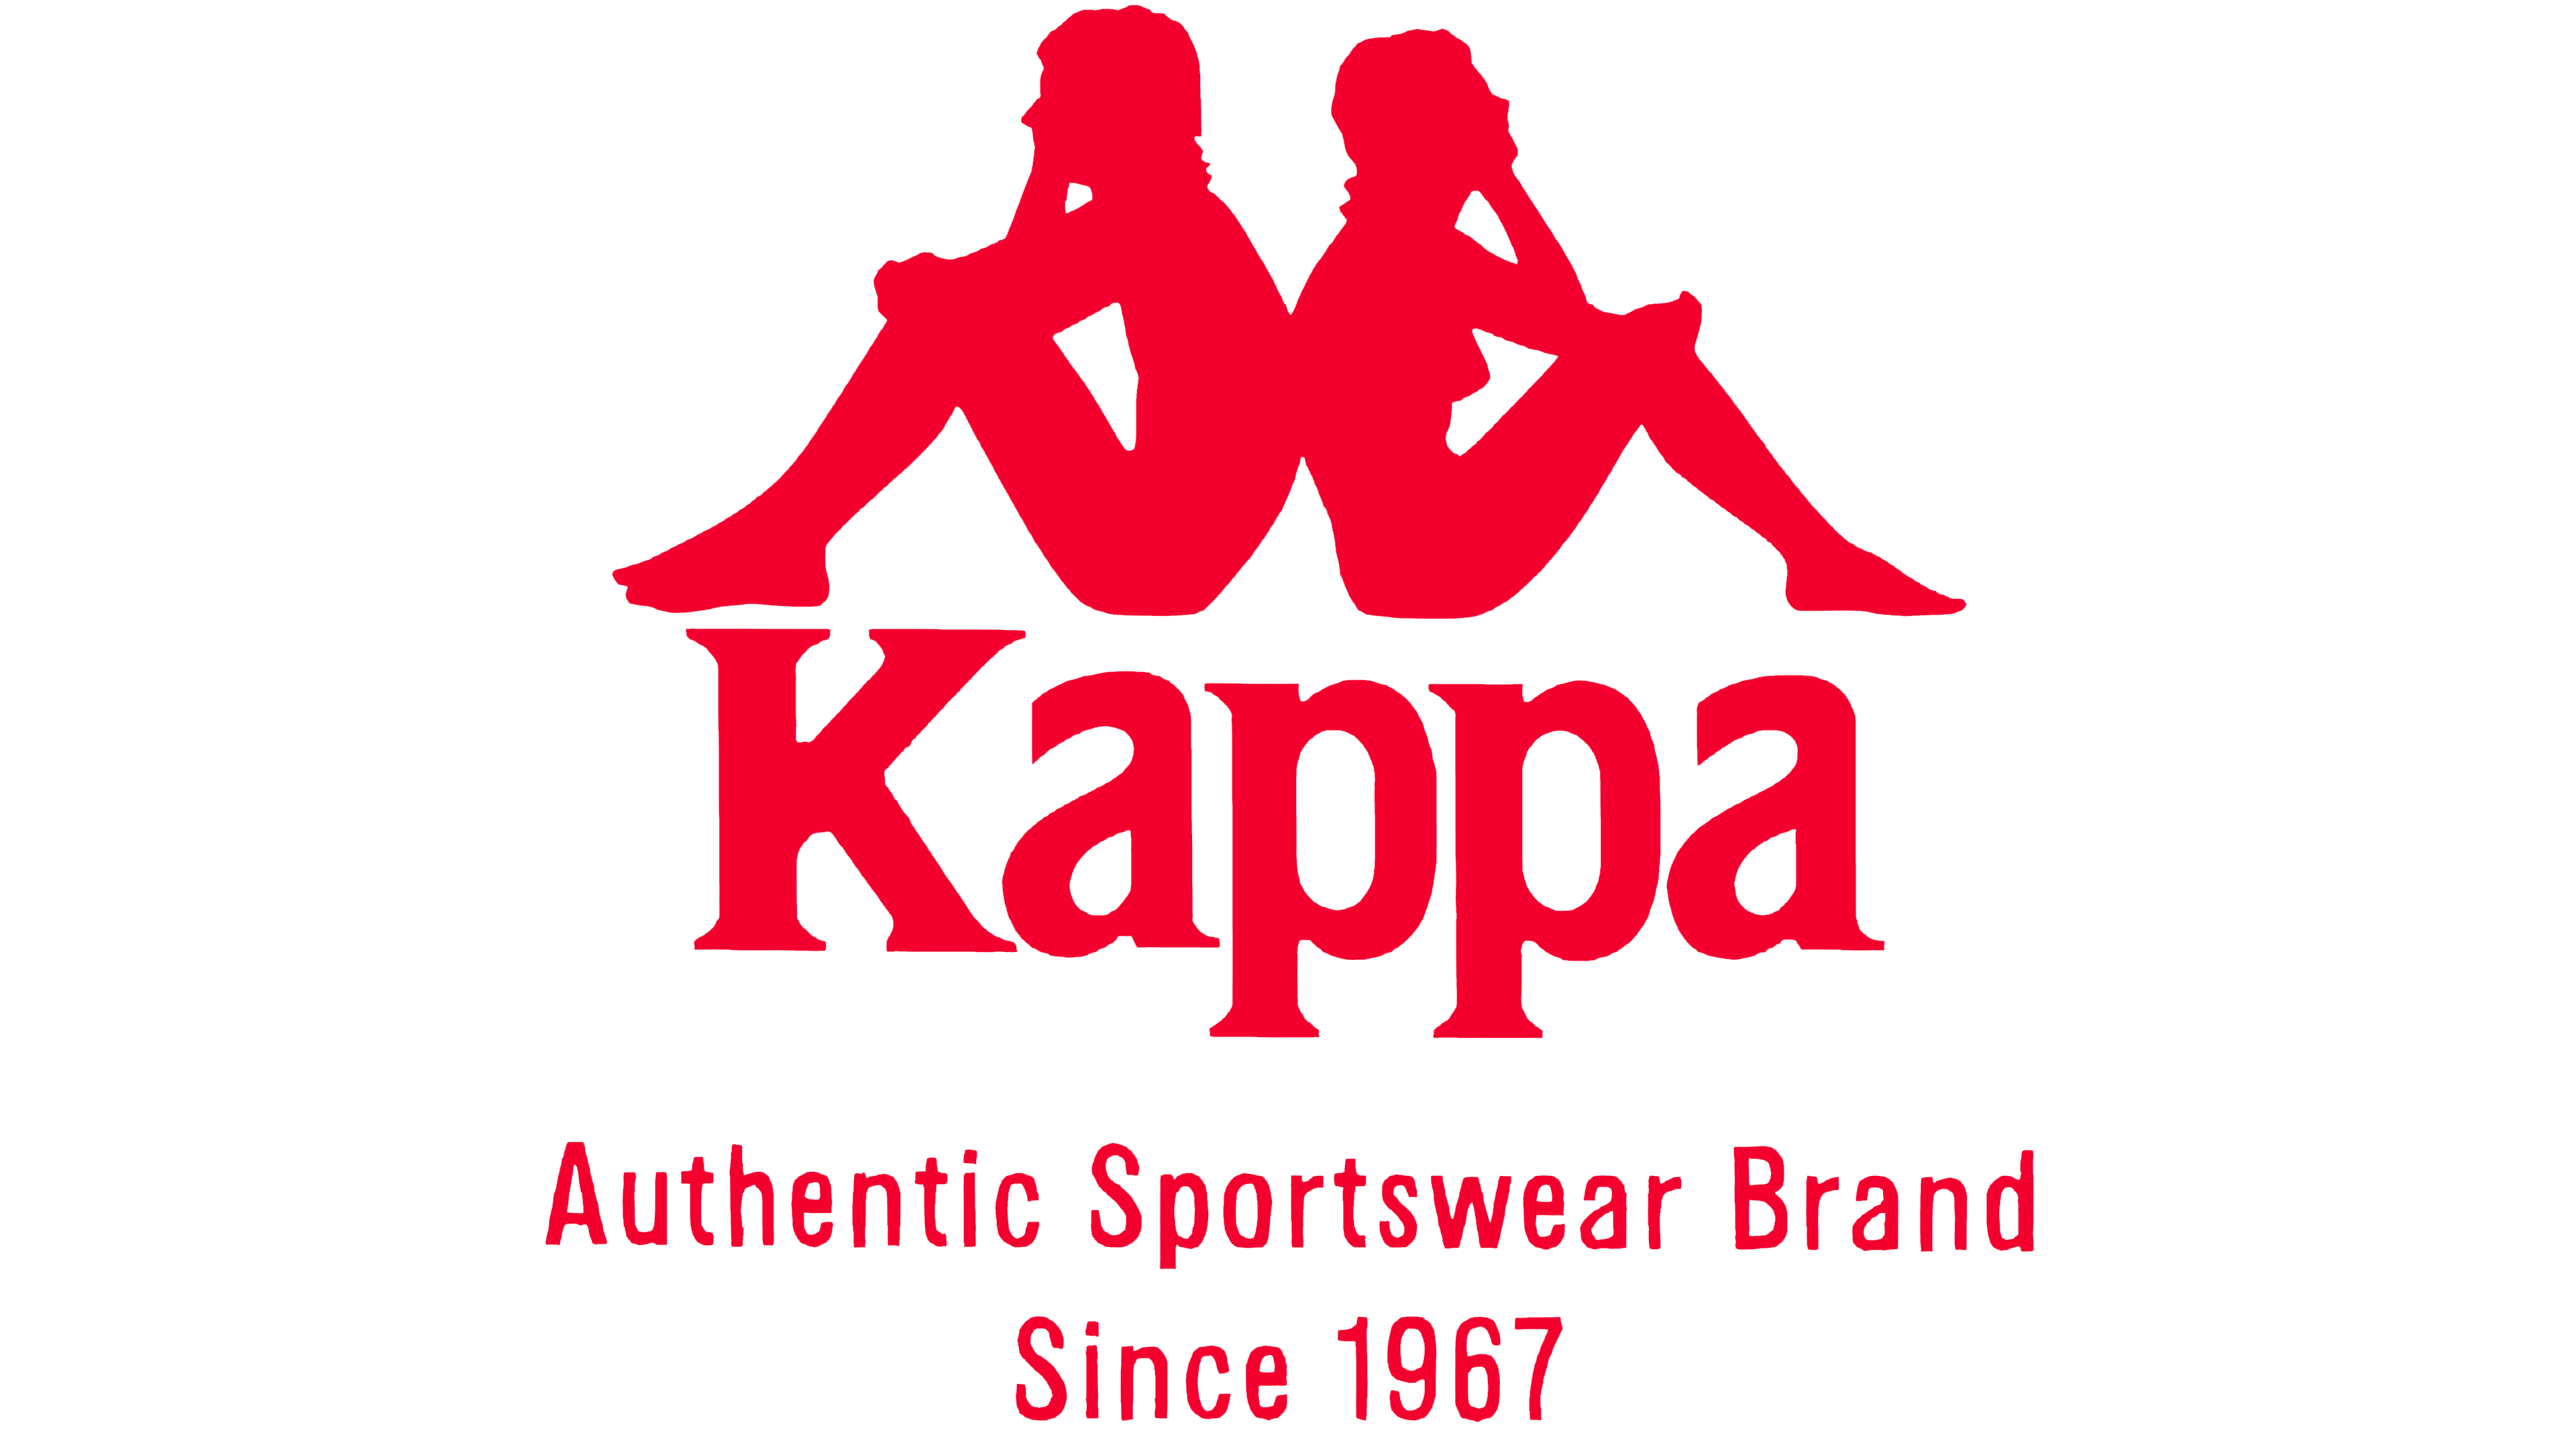 Pez anémona Político Delegar kappa brand logo meaning cooperar interior ...